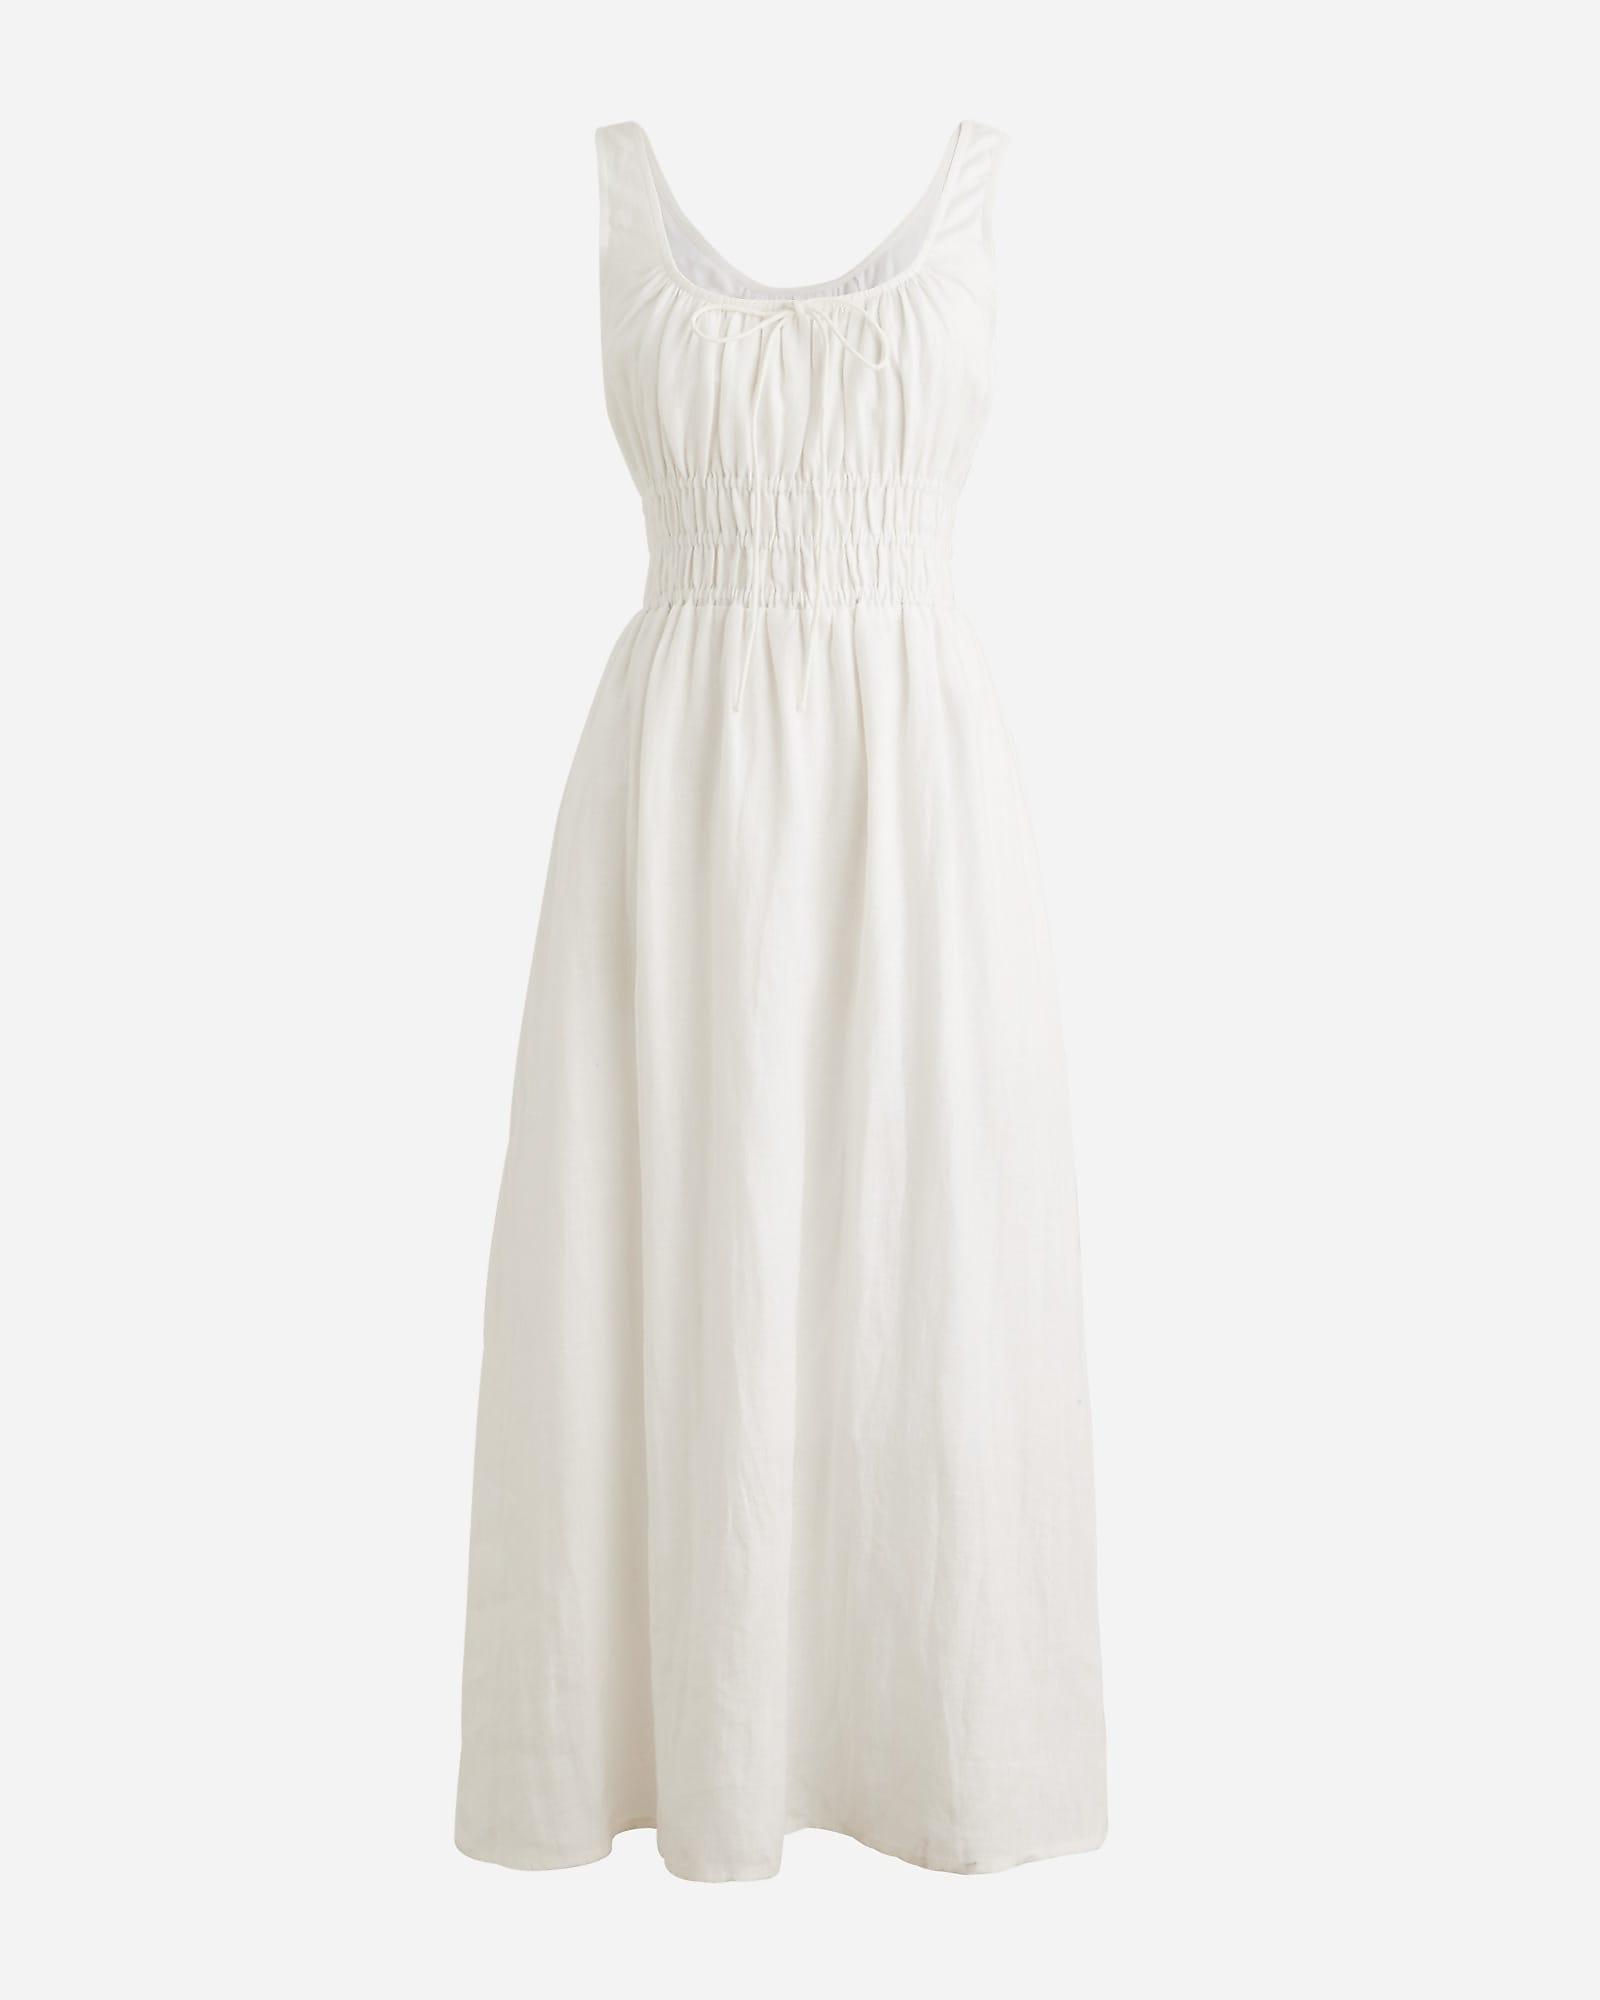 Smocked Linen Dress (Buy 2 Free Shipping) - dressowy